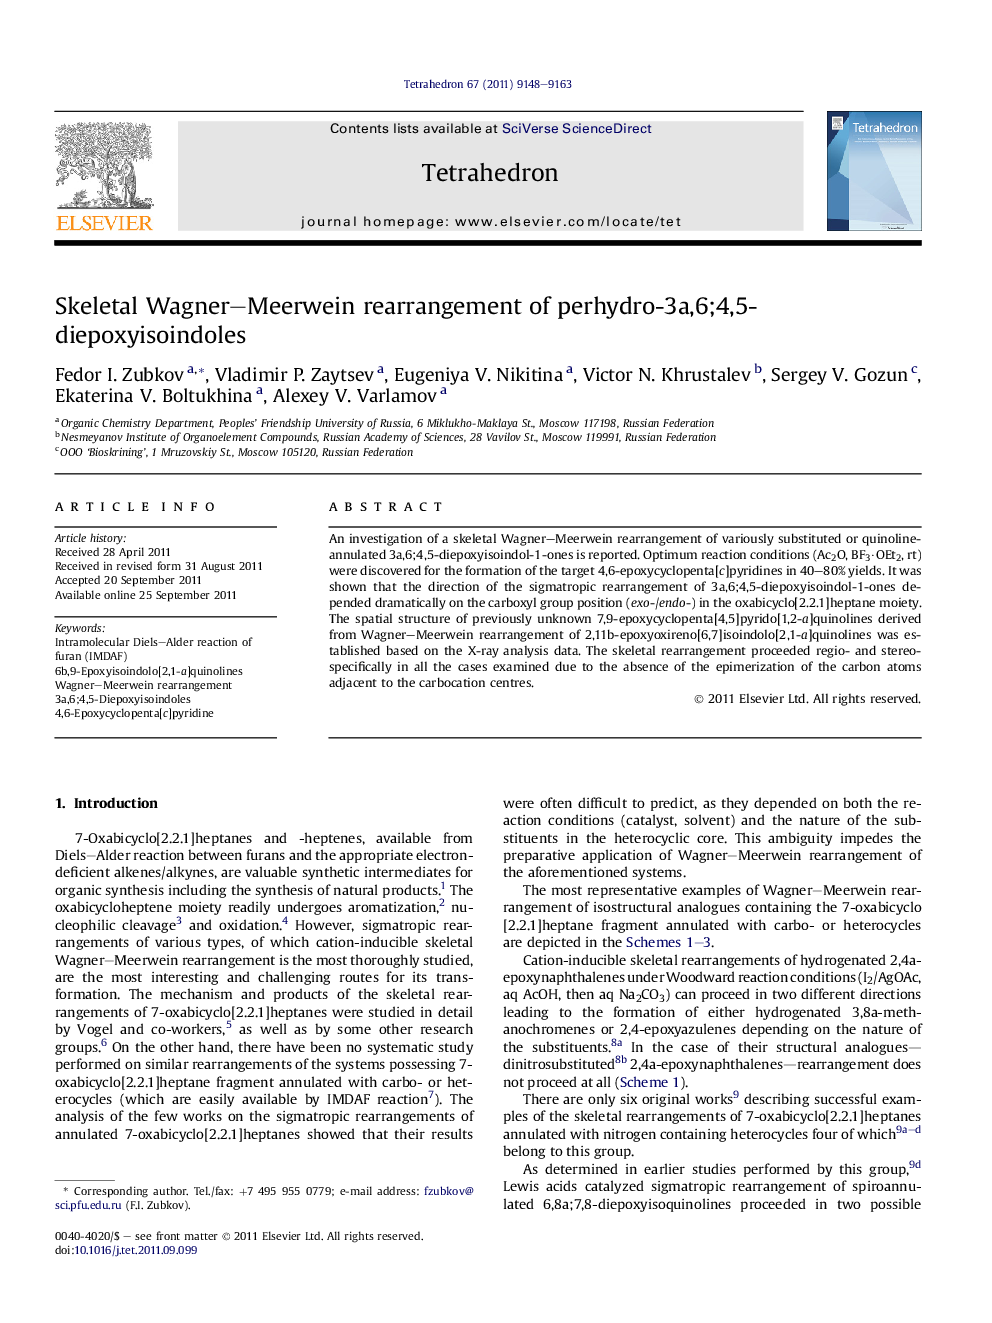 Skeletal Wagner-Meerwein rearrangement of perhydro-3a,6;4,5-diepoxyisoindoles